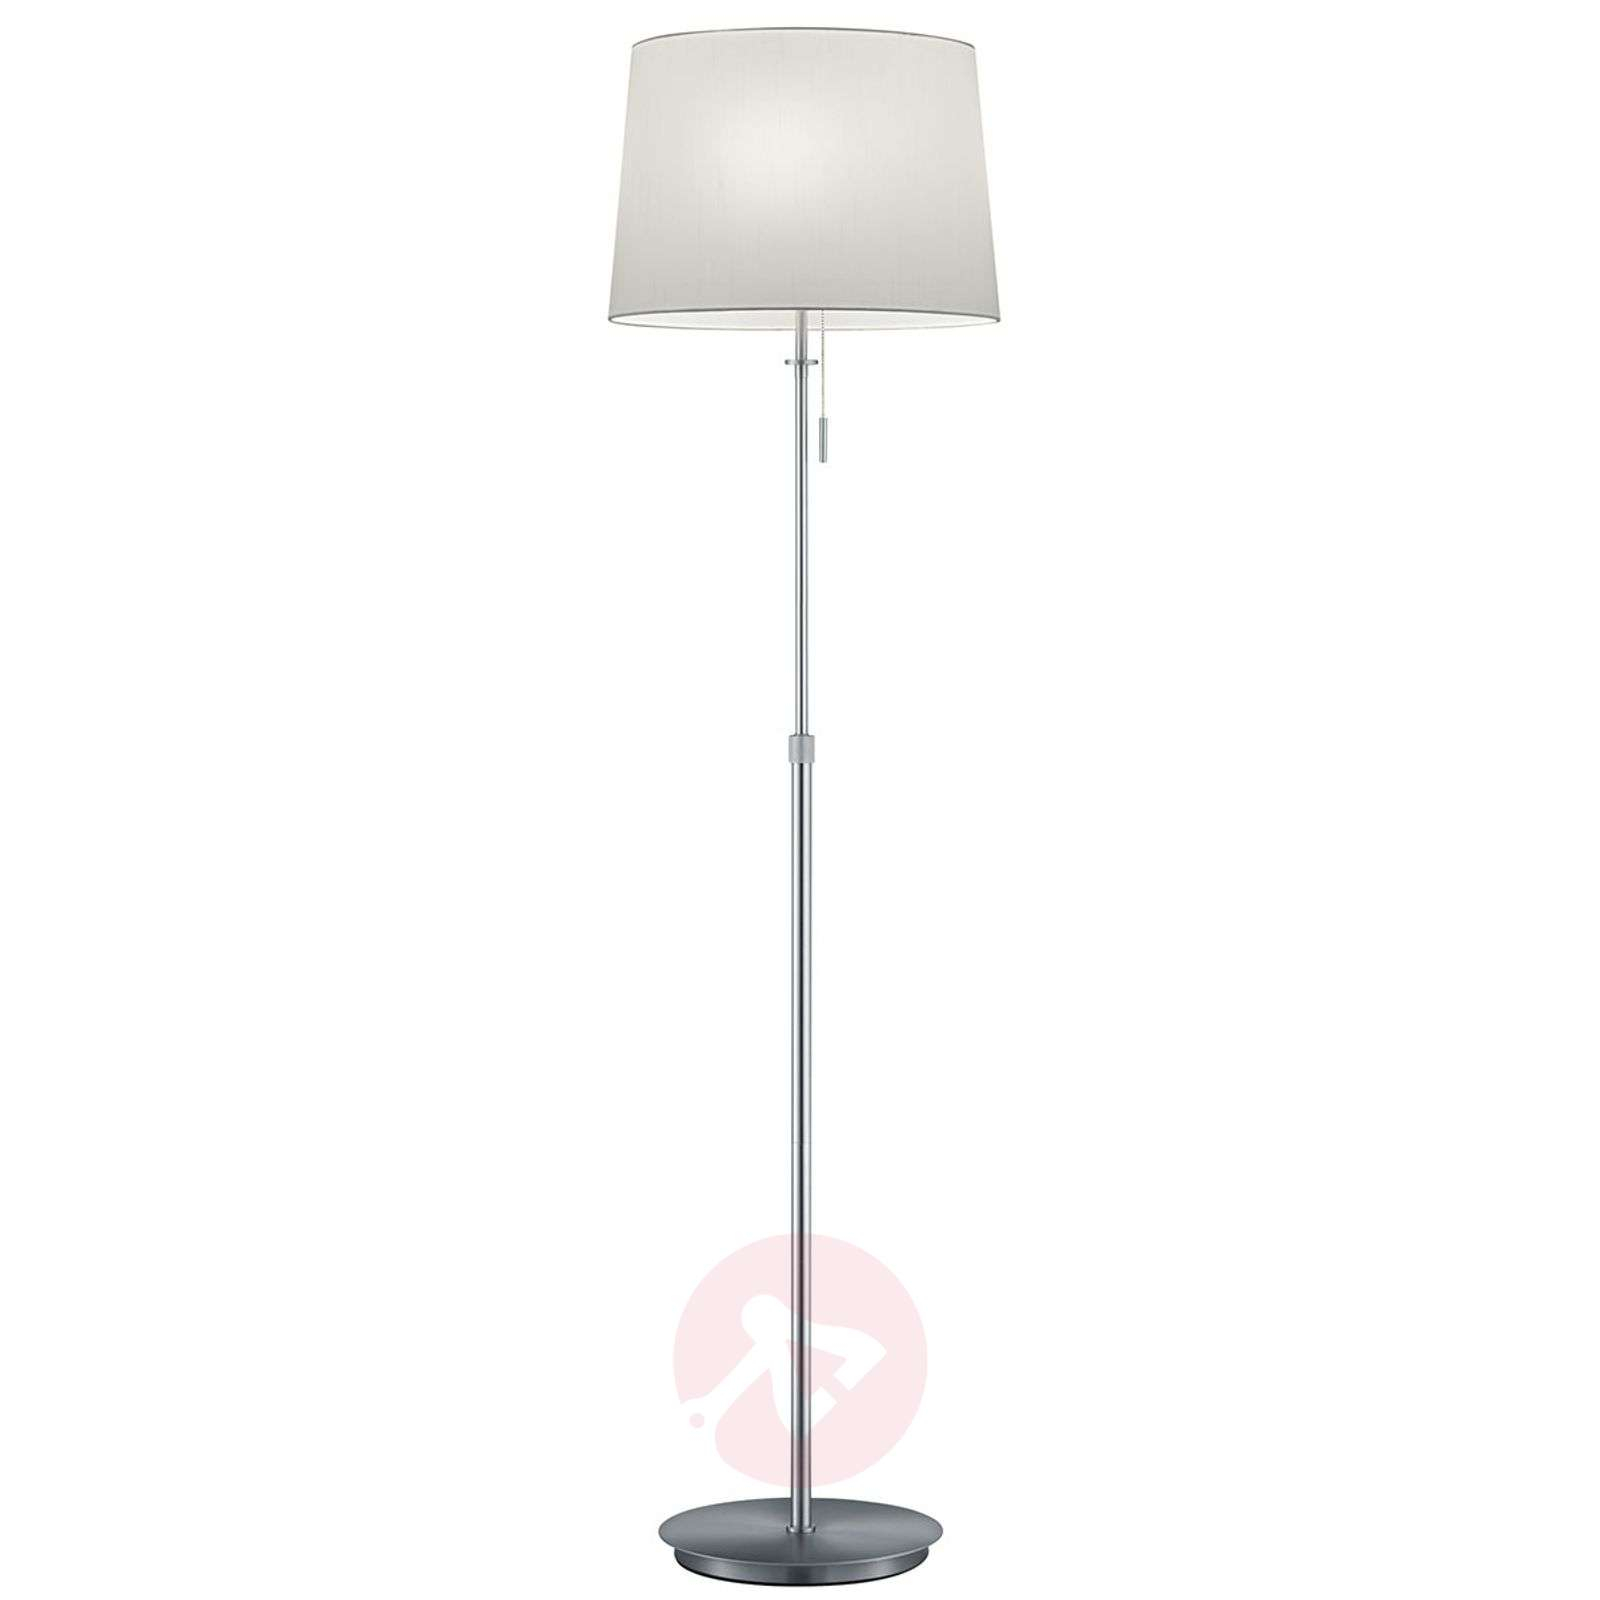 Lyon Height Adjustable Floor Lamp With Pull Switch regarding measurements 1600 X 1600